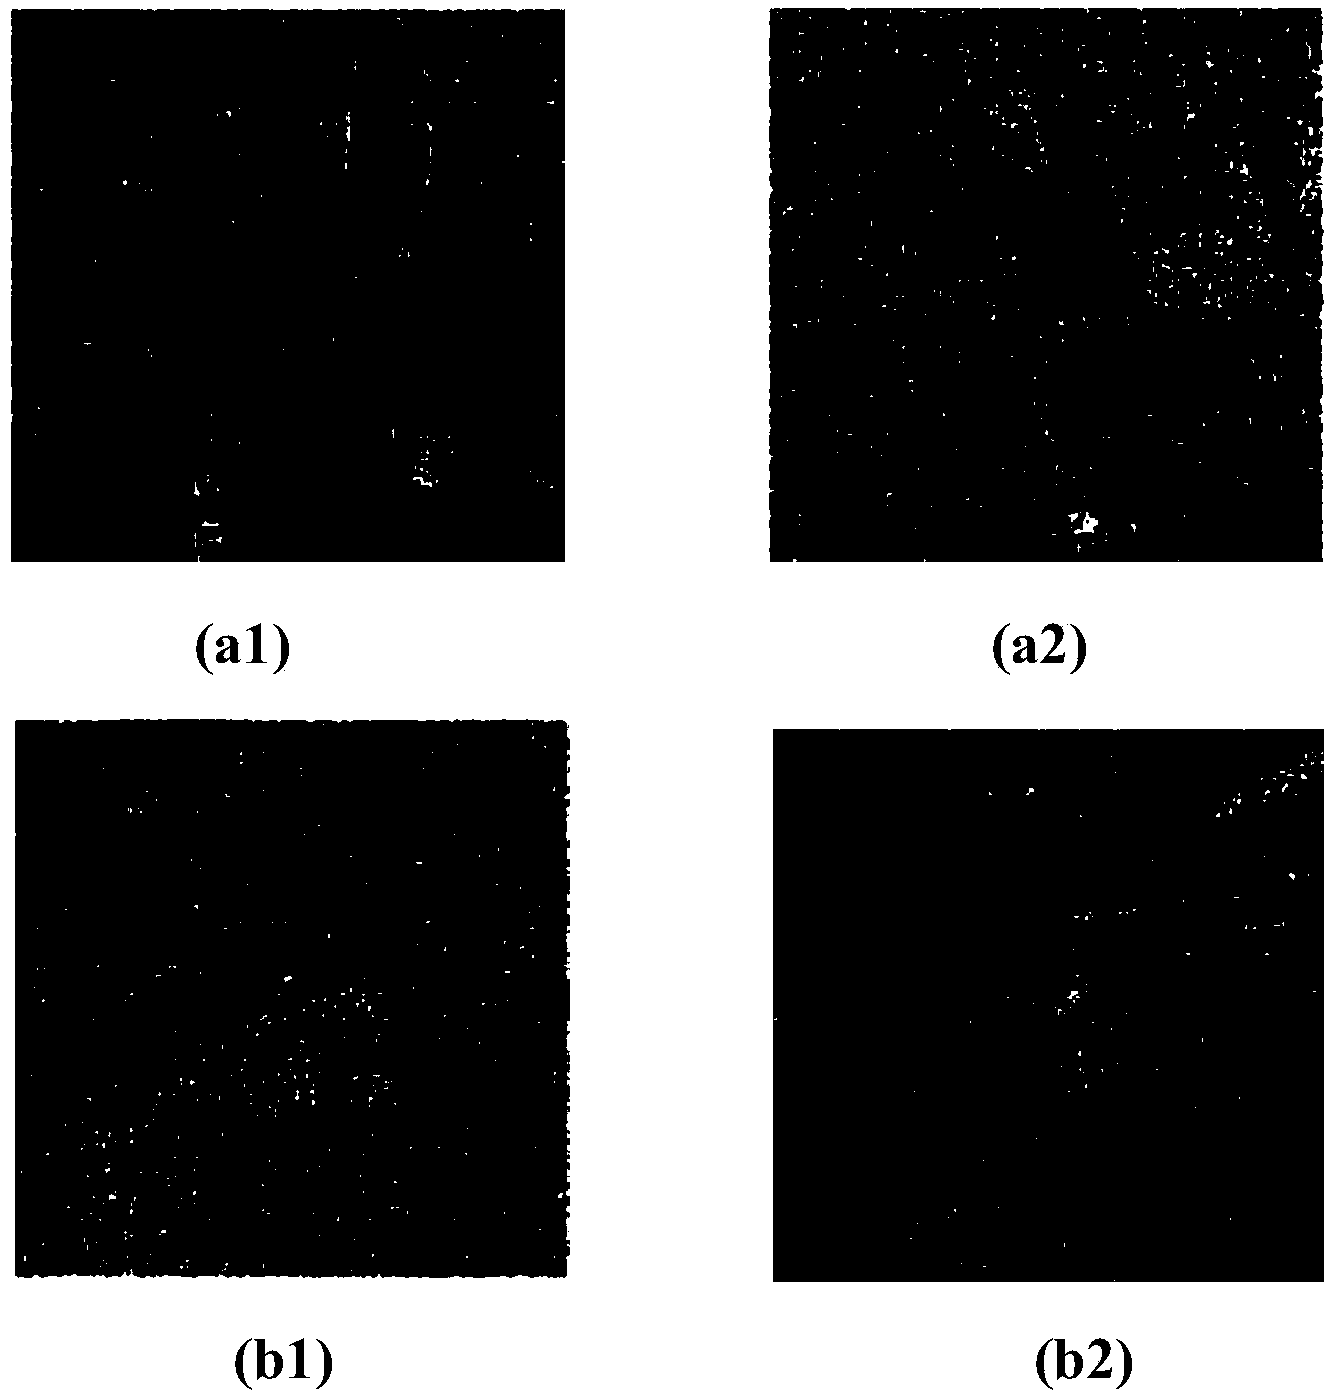 SAR image registration method based on salient division sub-region pair